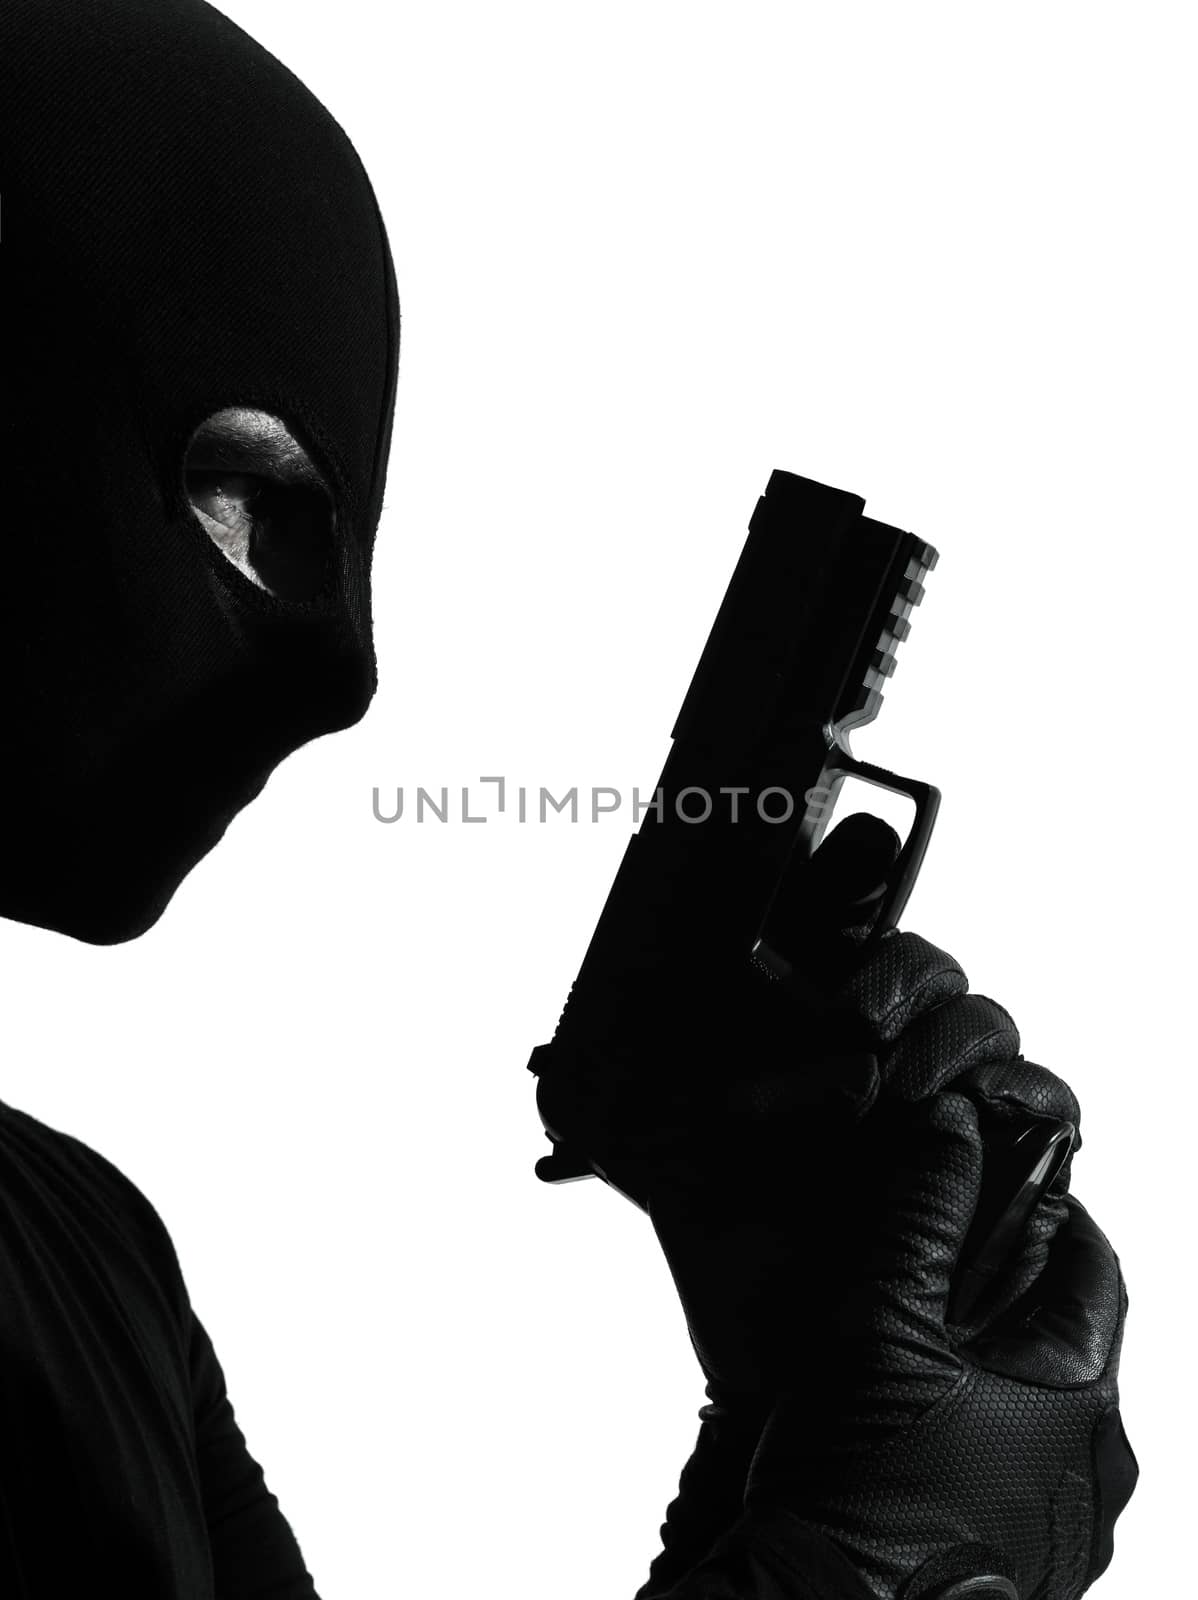 thief criminal terrorist holding gun portrait in silhouette studio isolated on white background